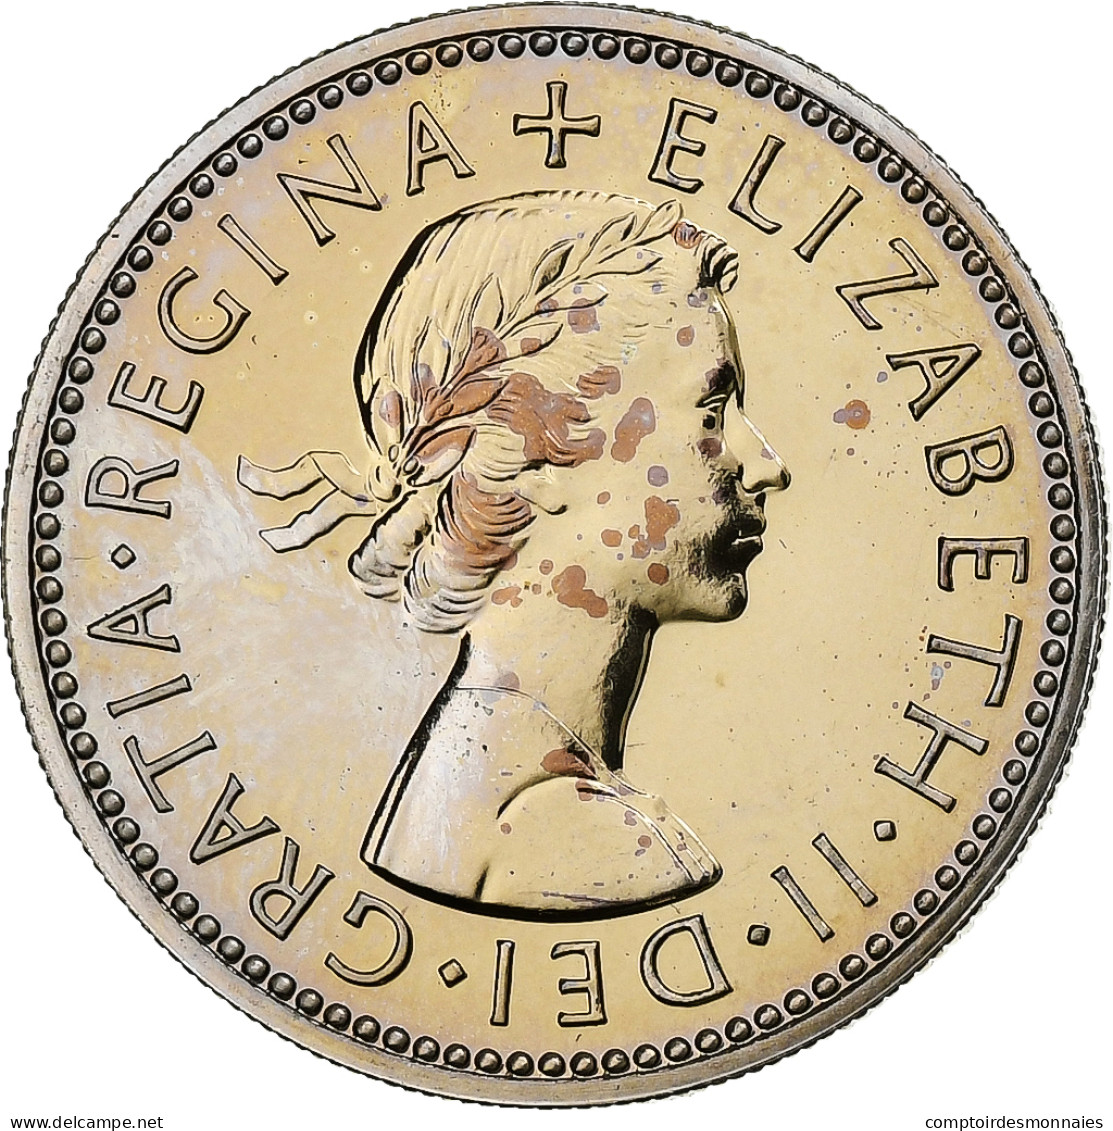 Grande-Bretagne, Shilling, 1970, Cupro-nickel, SUP - I. 1 Shilling